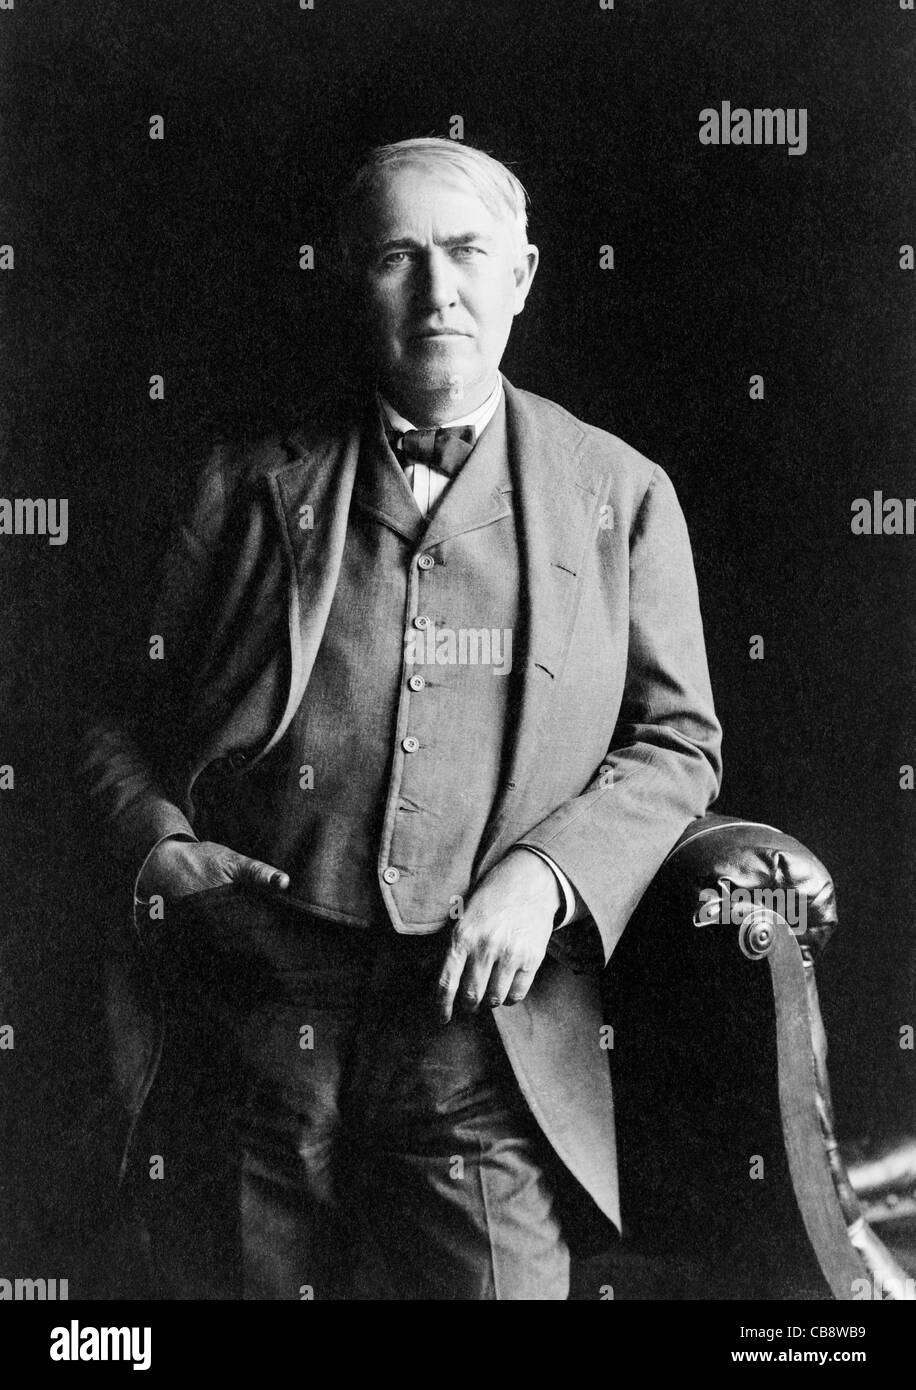 Vintage portrait photo of American inventor and businessman Thomas Alva Edison (1847 – 1931). Photo circa 1904. Stock Photo